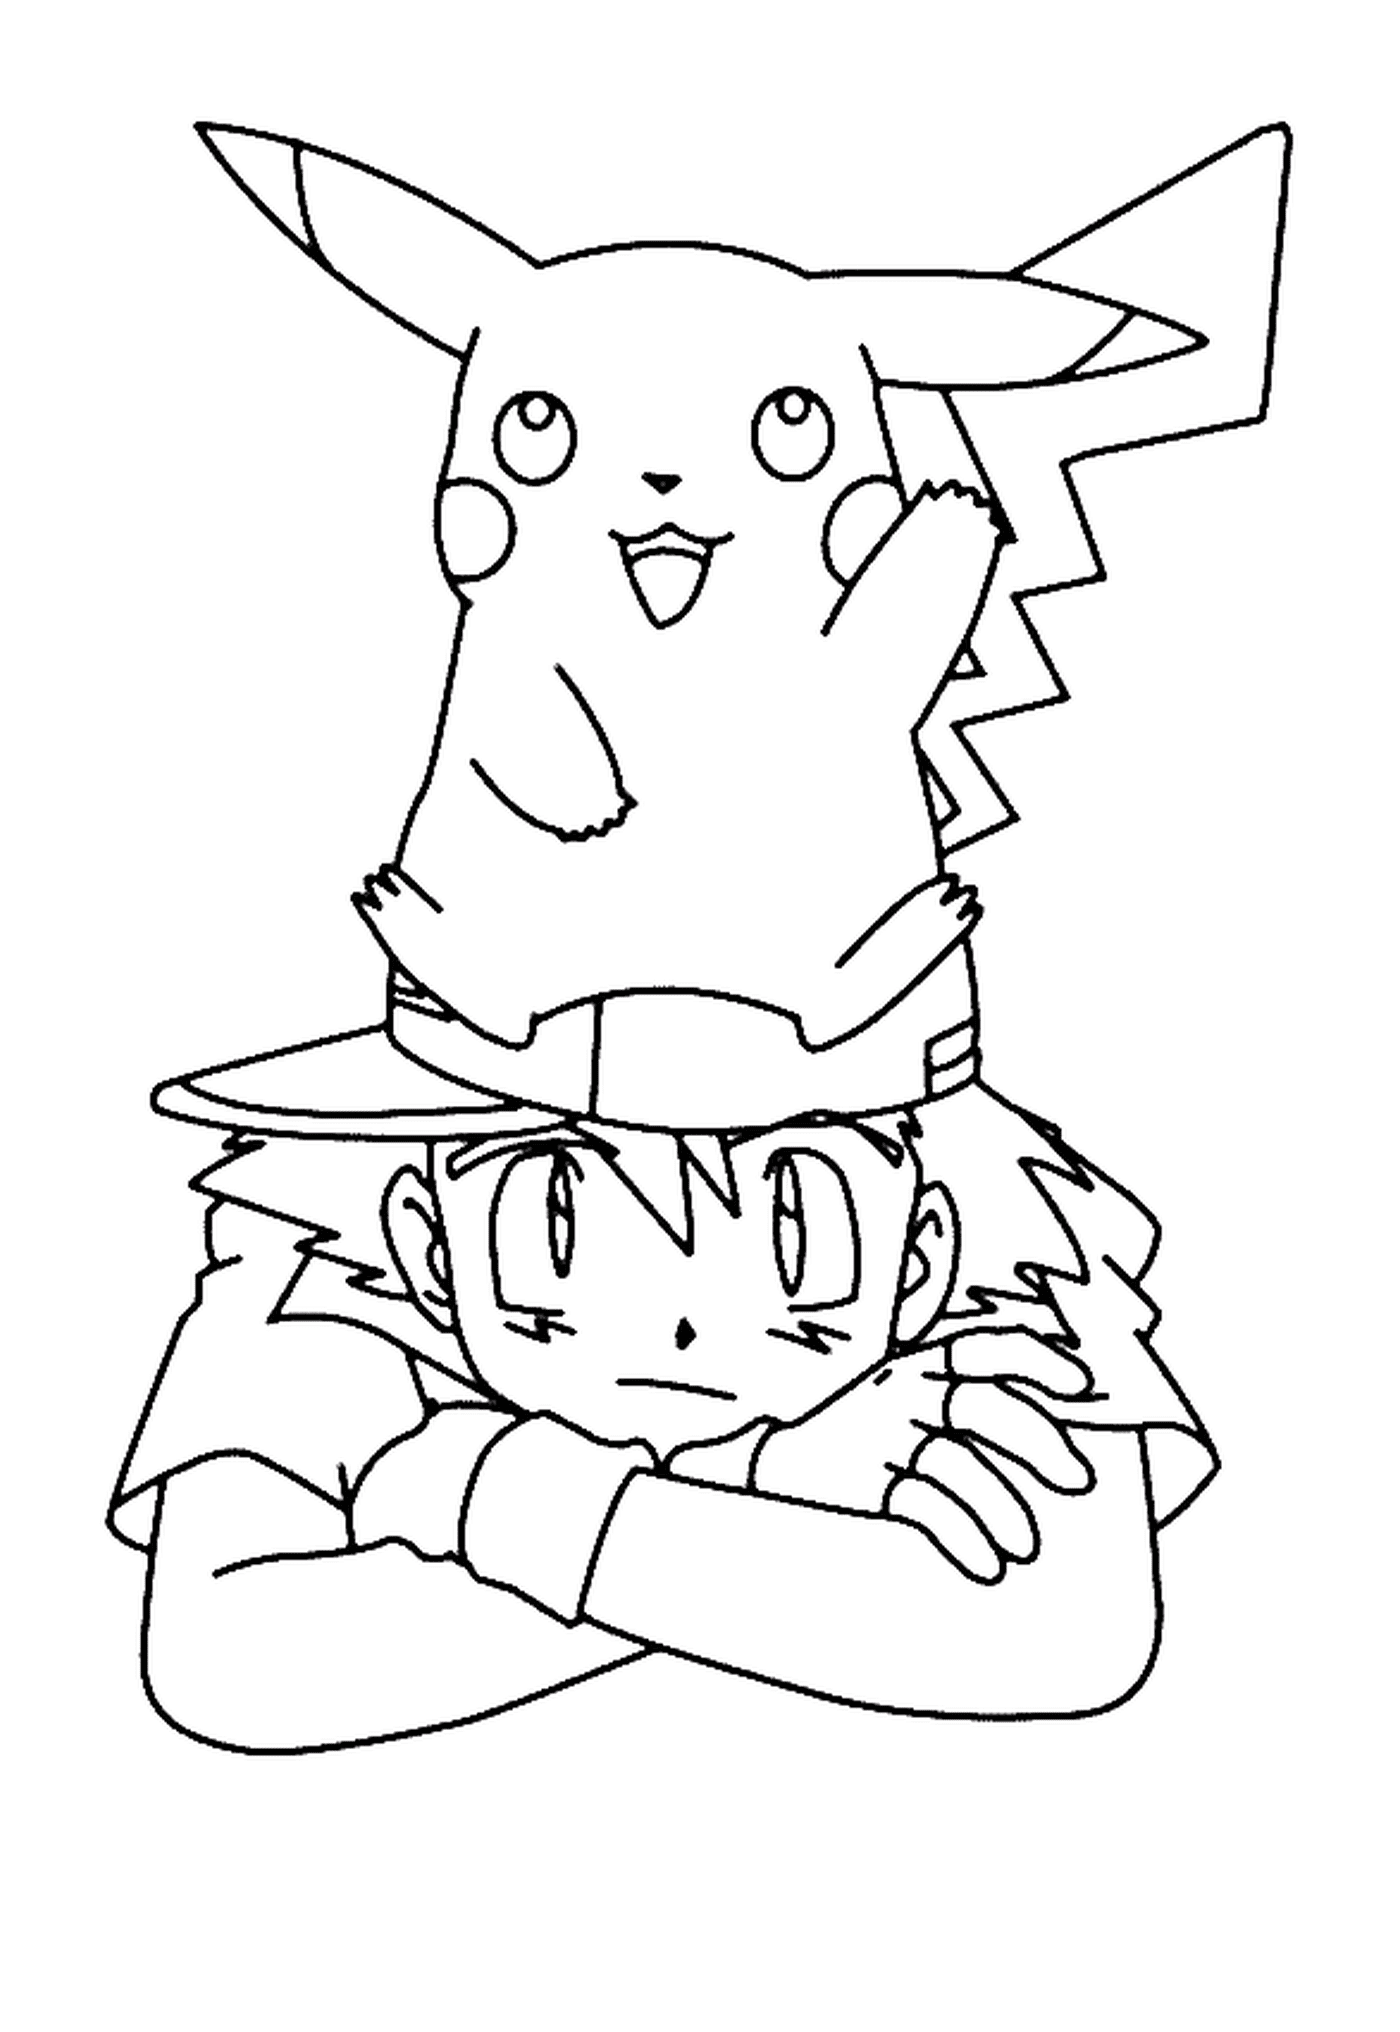   Un garçon et Pikachu ensemble 